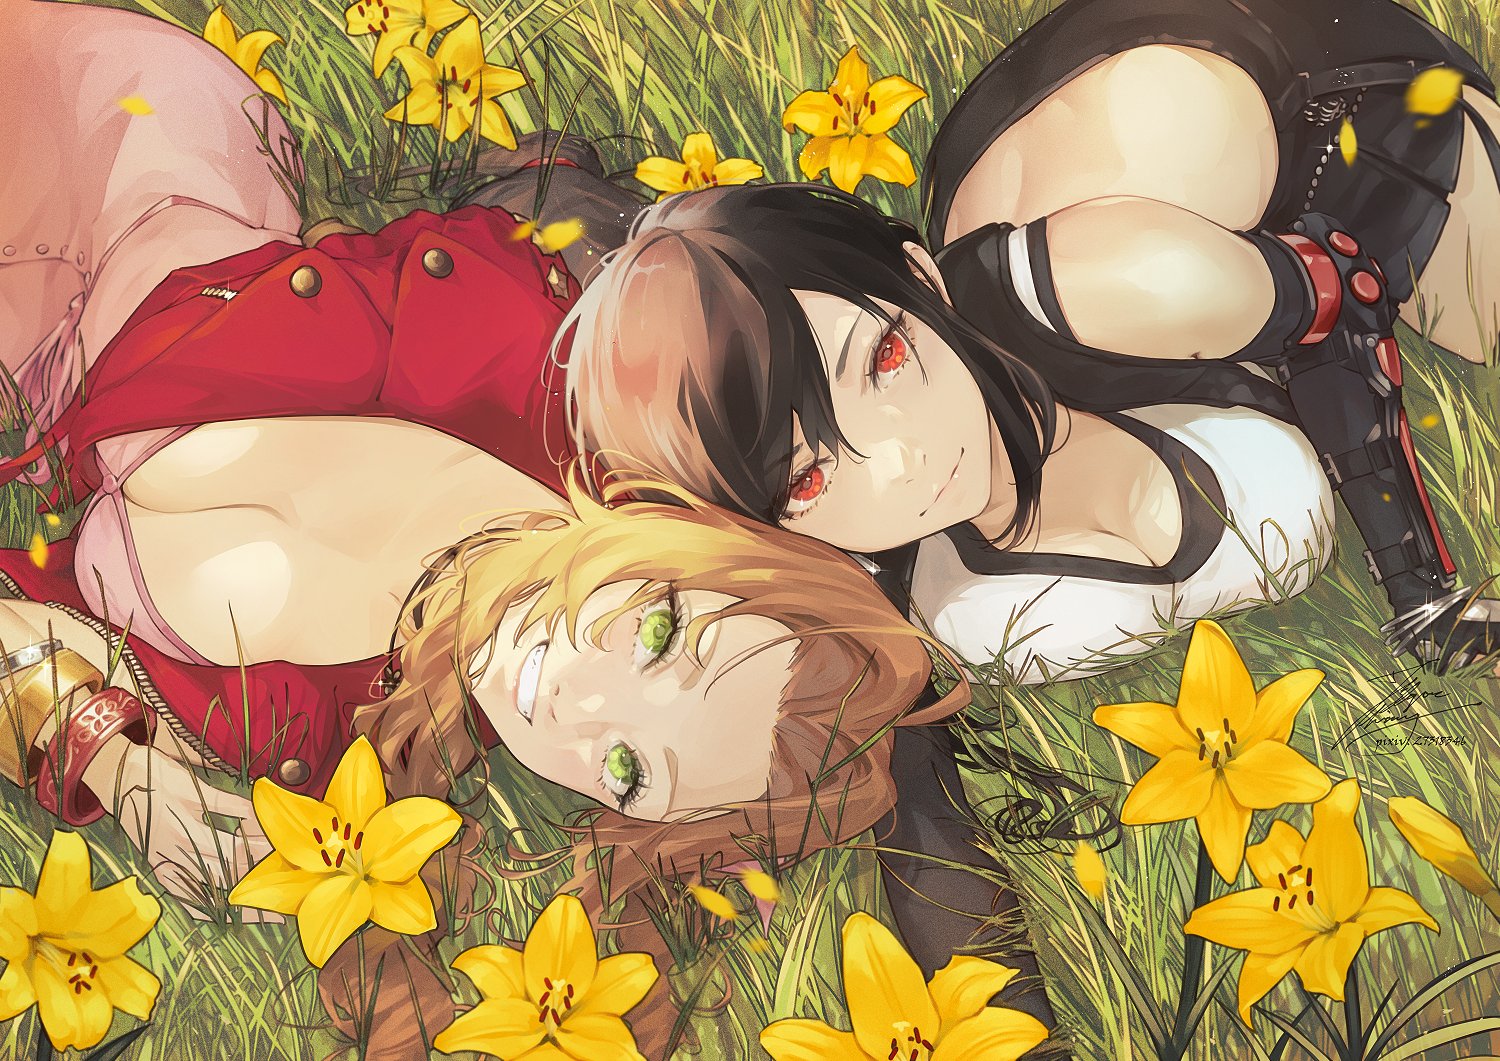 Final Fantasy Vii Tifa Lockhart Aeris Gainesbourg Flowers Red Eyes Looking At Viewer Smiling Anime G 1500x1061